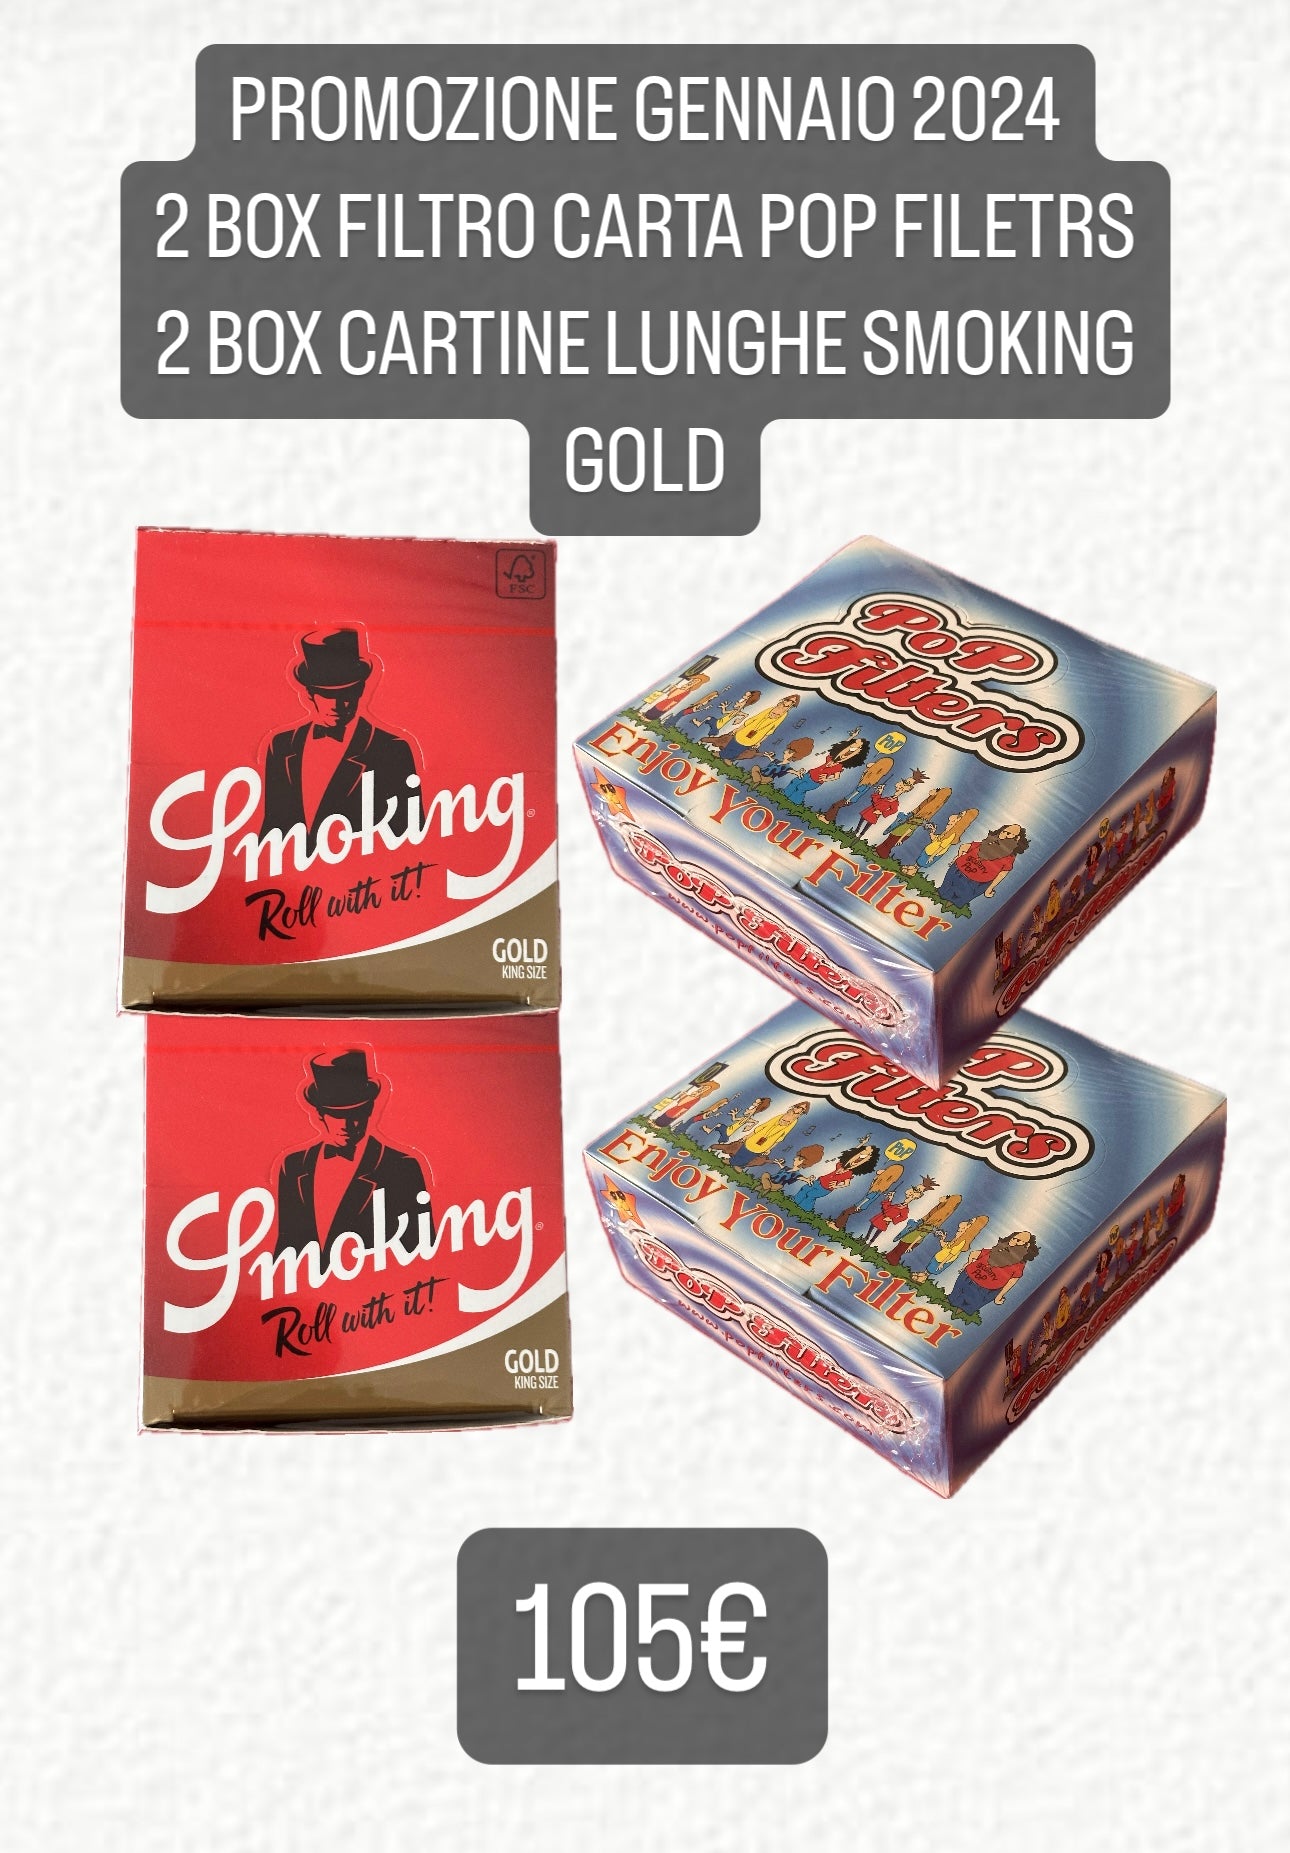 Cartine Lunghe Smoking Gold + Pop Filters Filtro Carta